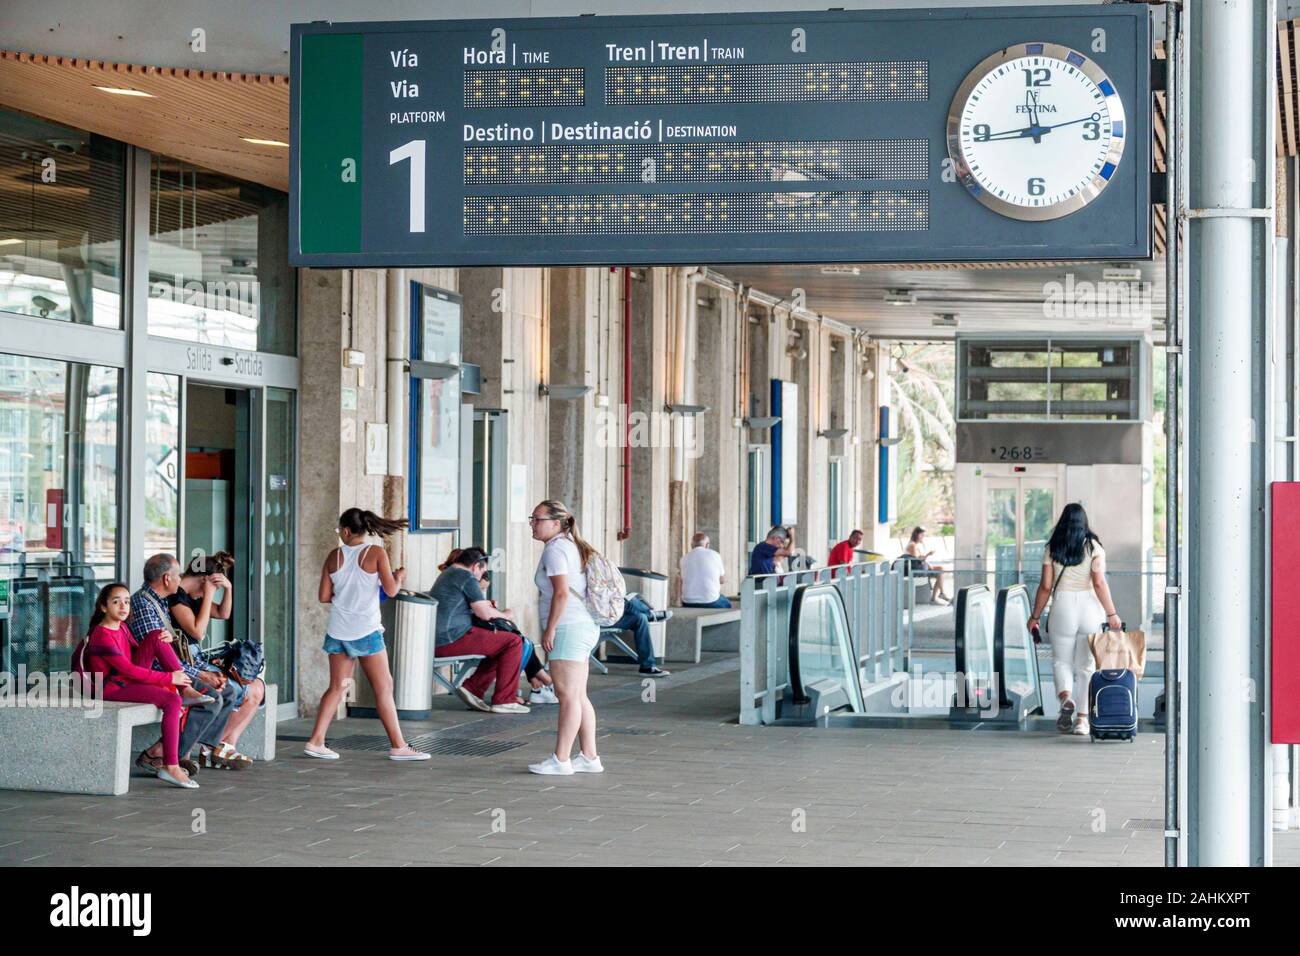 Tarragona Spain Hispanic Catalonia Renfe train railway station,platform 1,passenger information display system,PIDS,man,girl,woman,teen,passenger comm Stock Photo